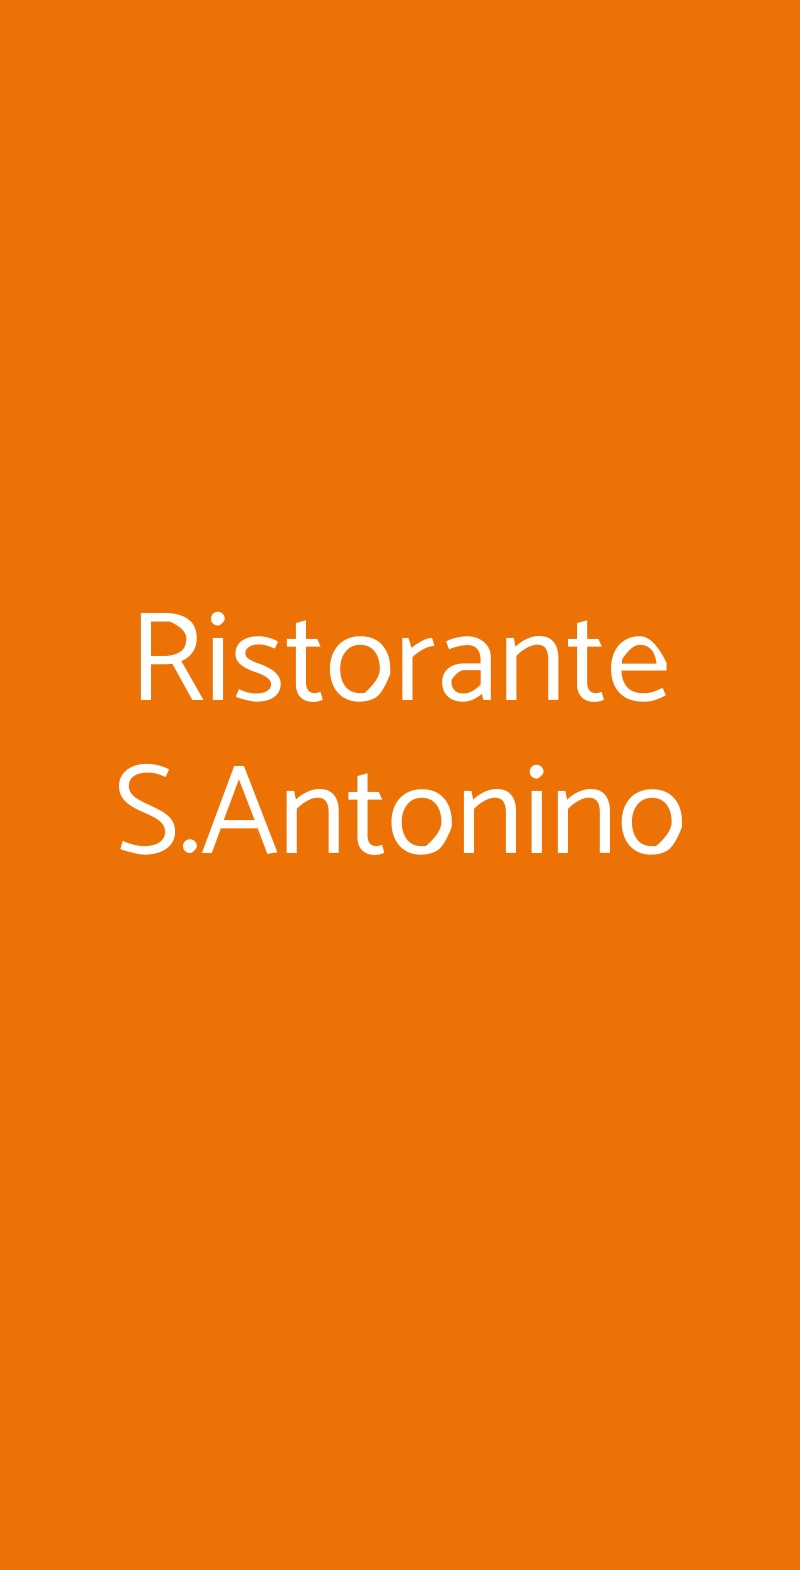 Ristorante S.Antonino Sorrento menù 1 pagina